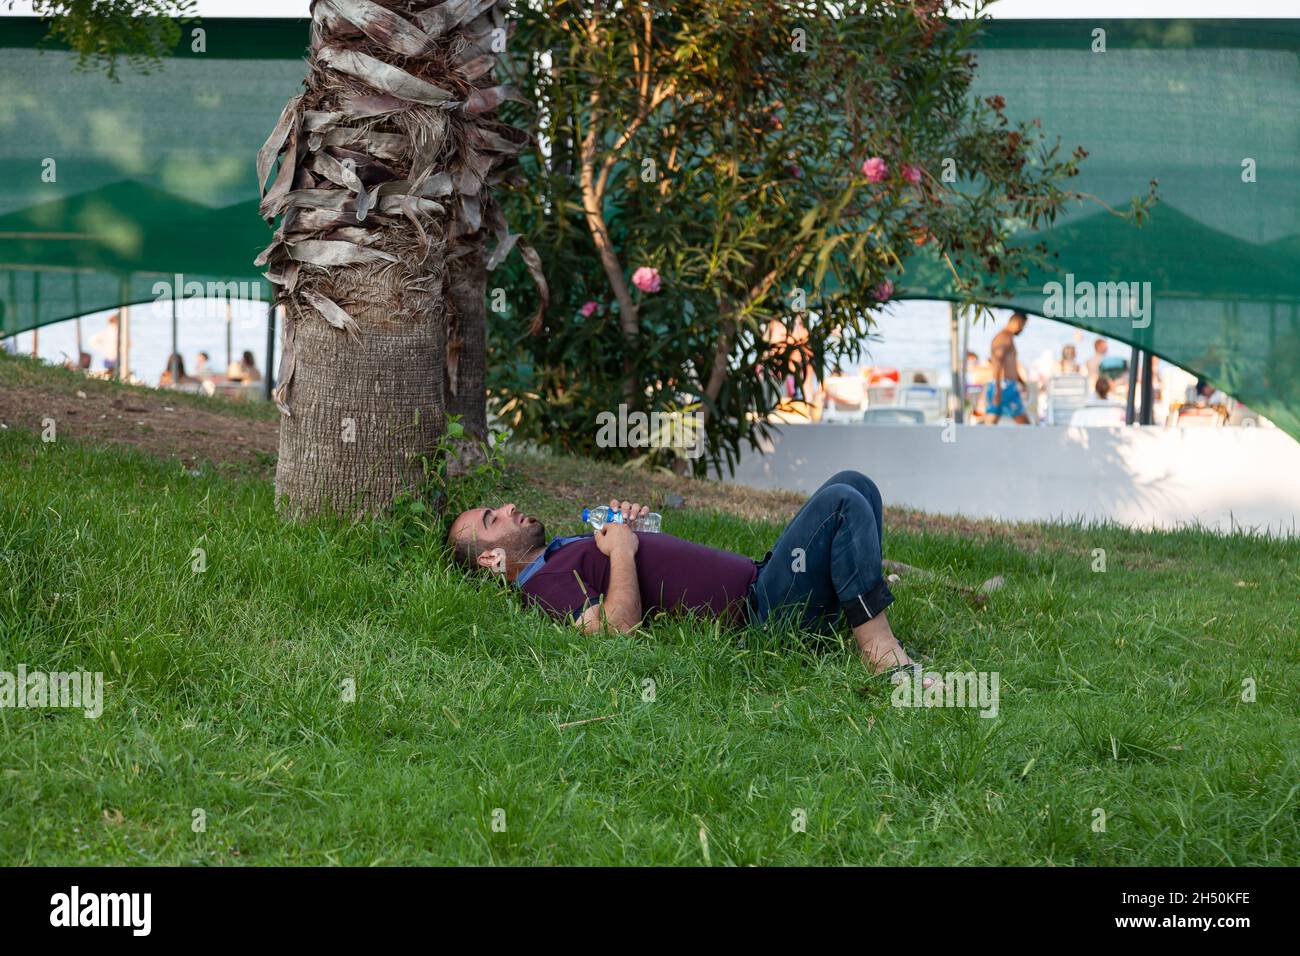 Kemer, Turkey - 08. 25. 2021: A man who fell asleep on a green lawn in the summer sun. A homeless man sleeps on the grass in the park. Stock Photo